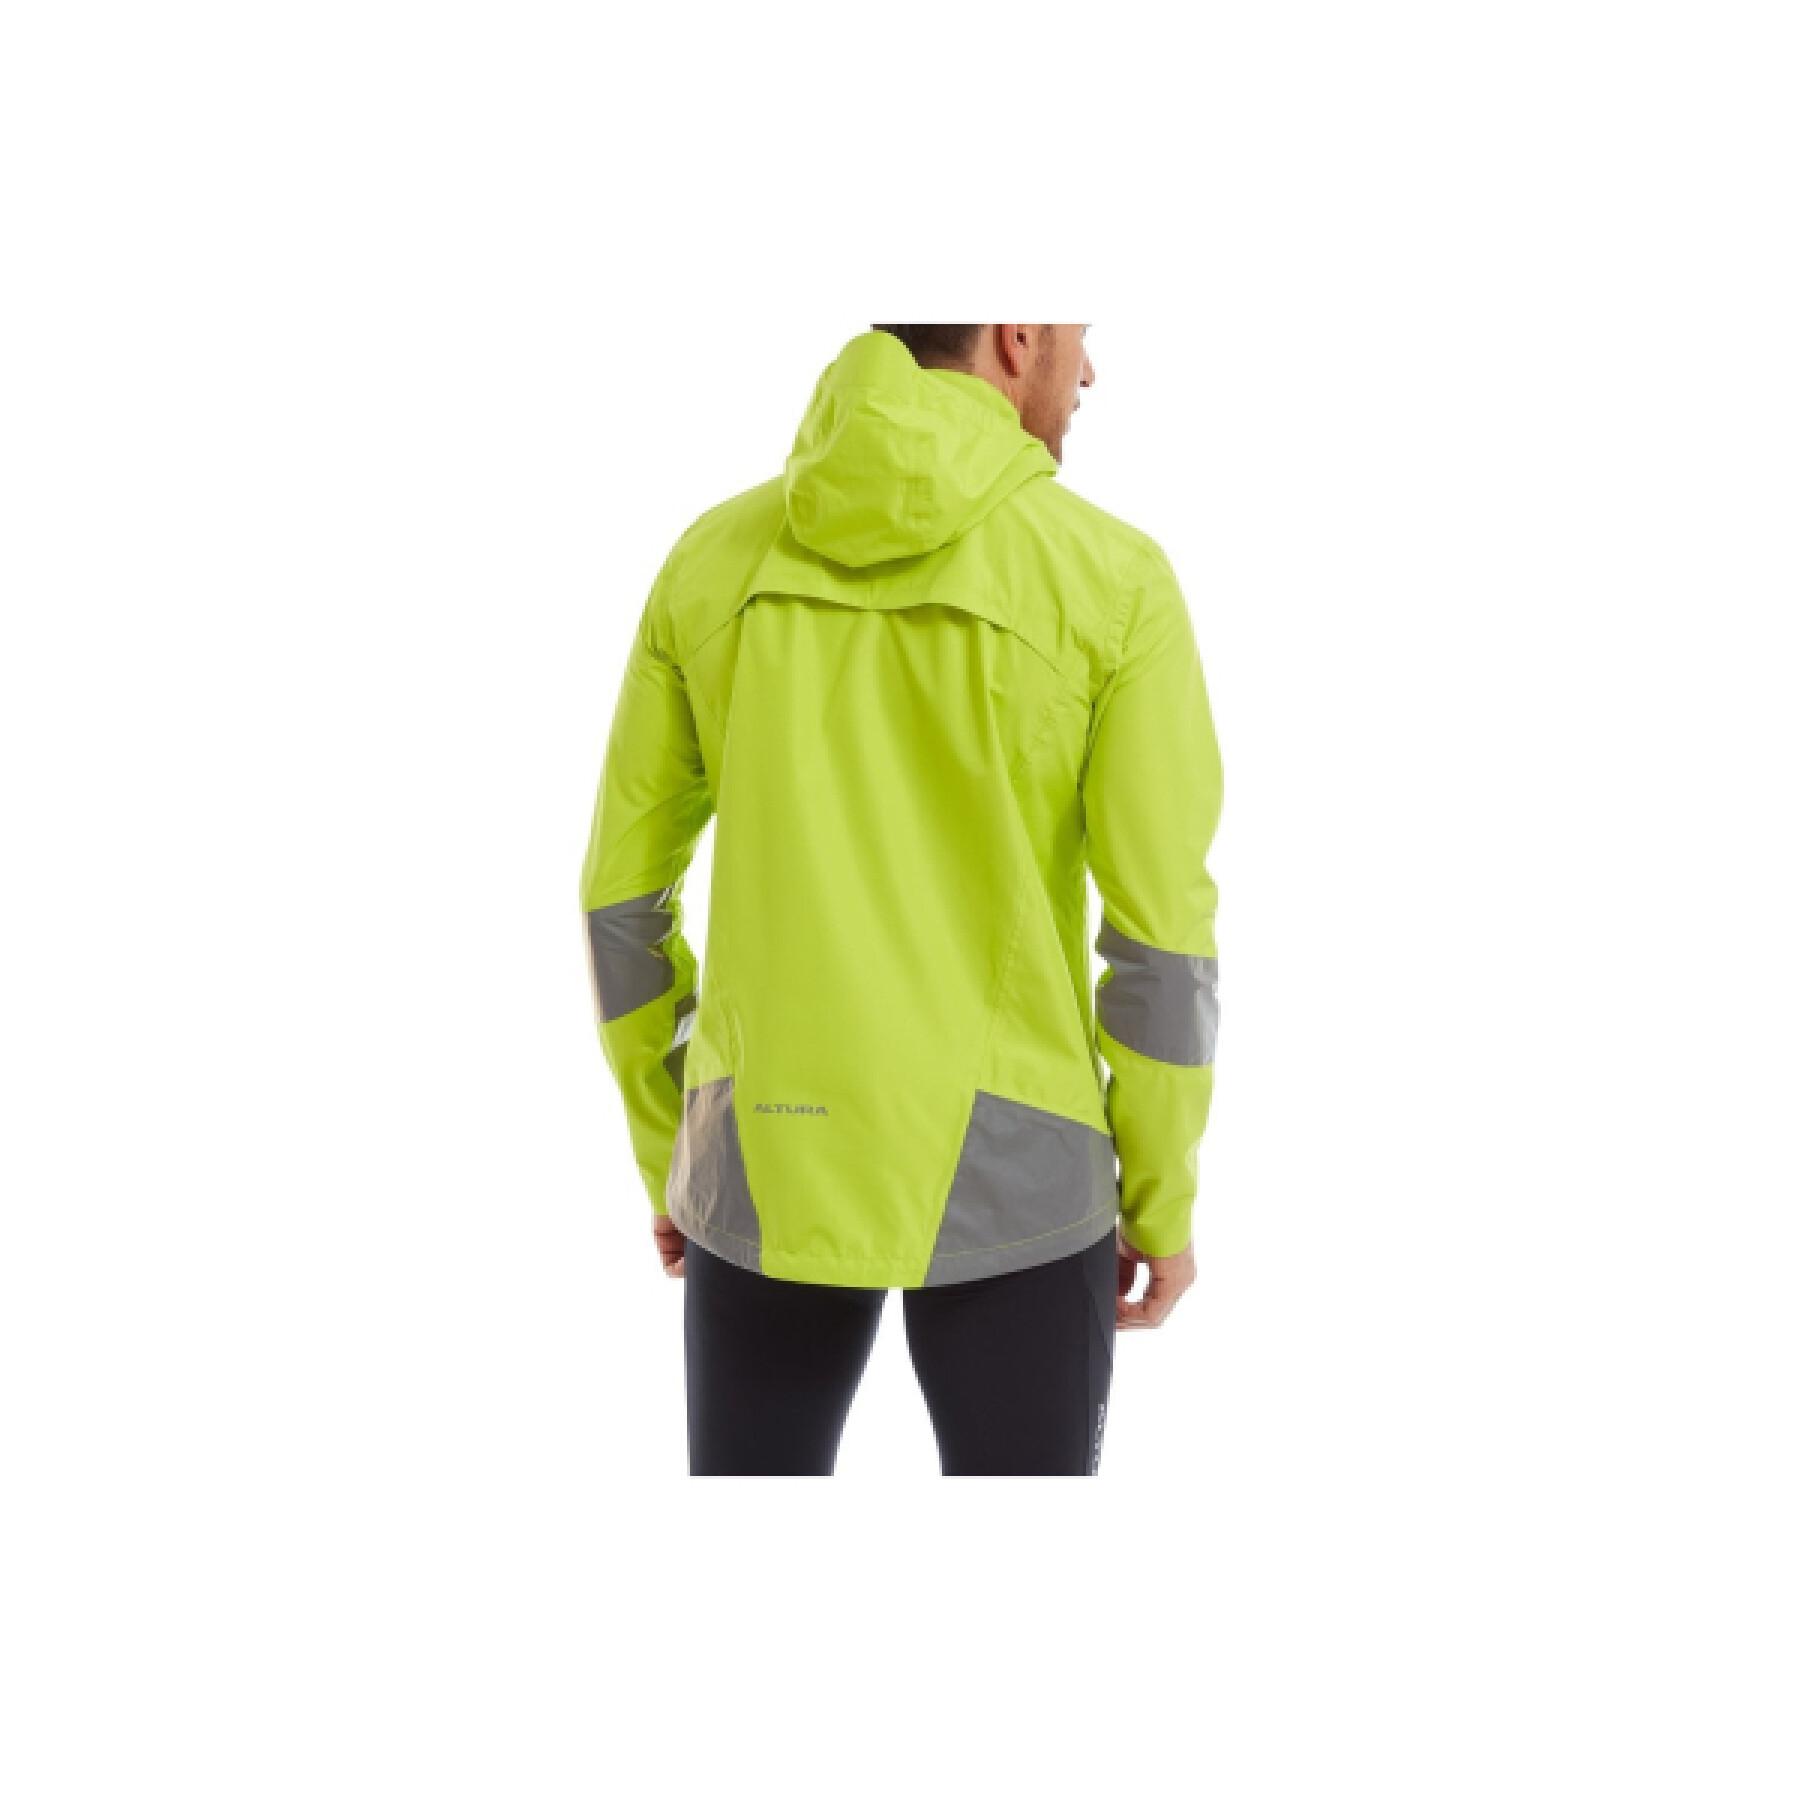 Waterproof jacket Altura Typhoon Nightvision 2022